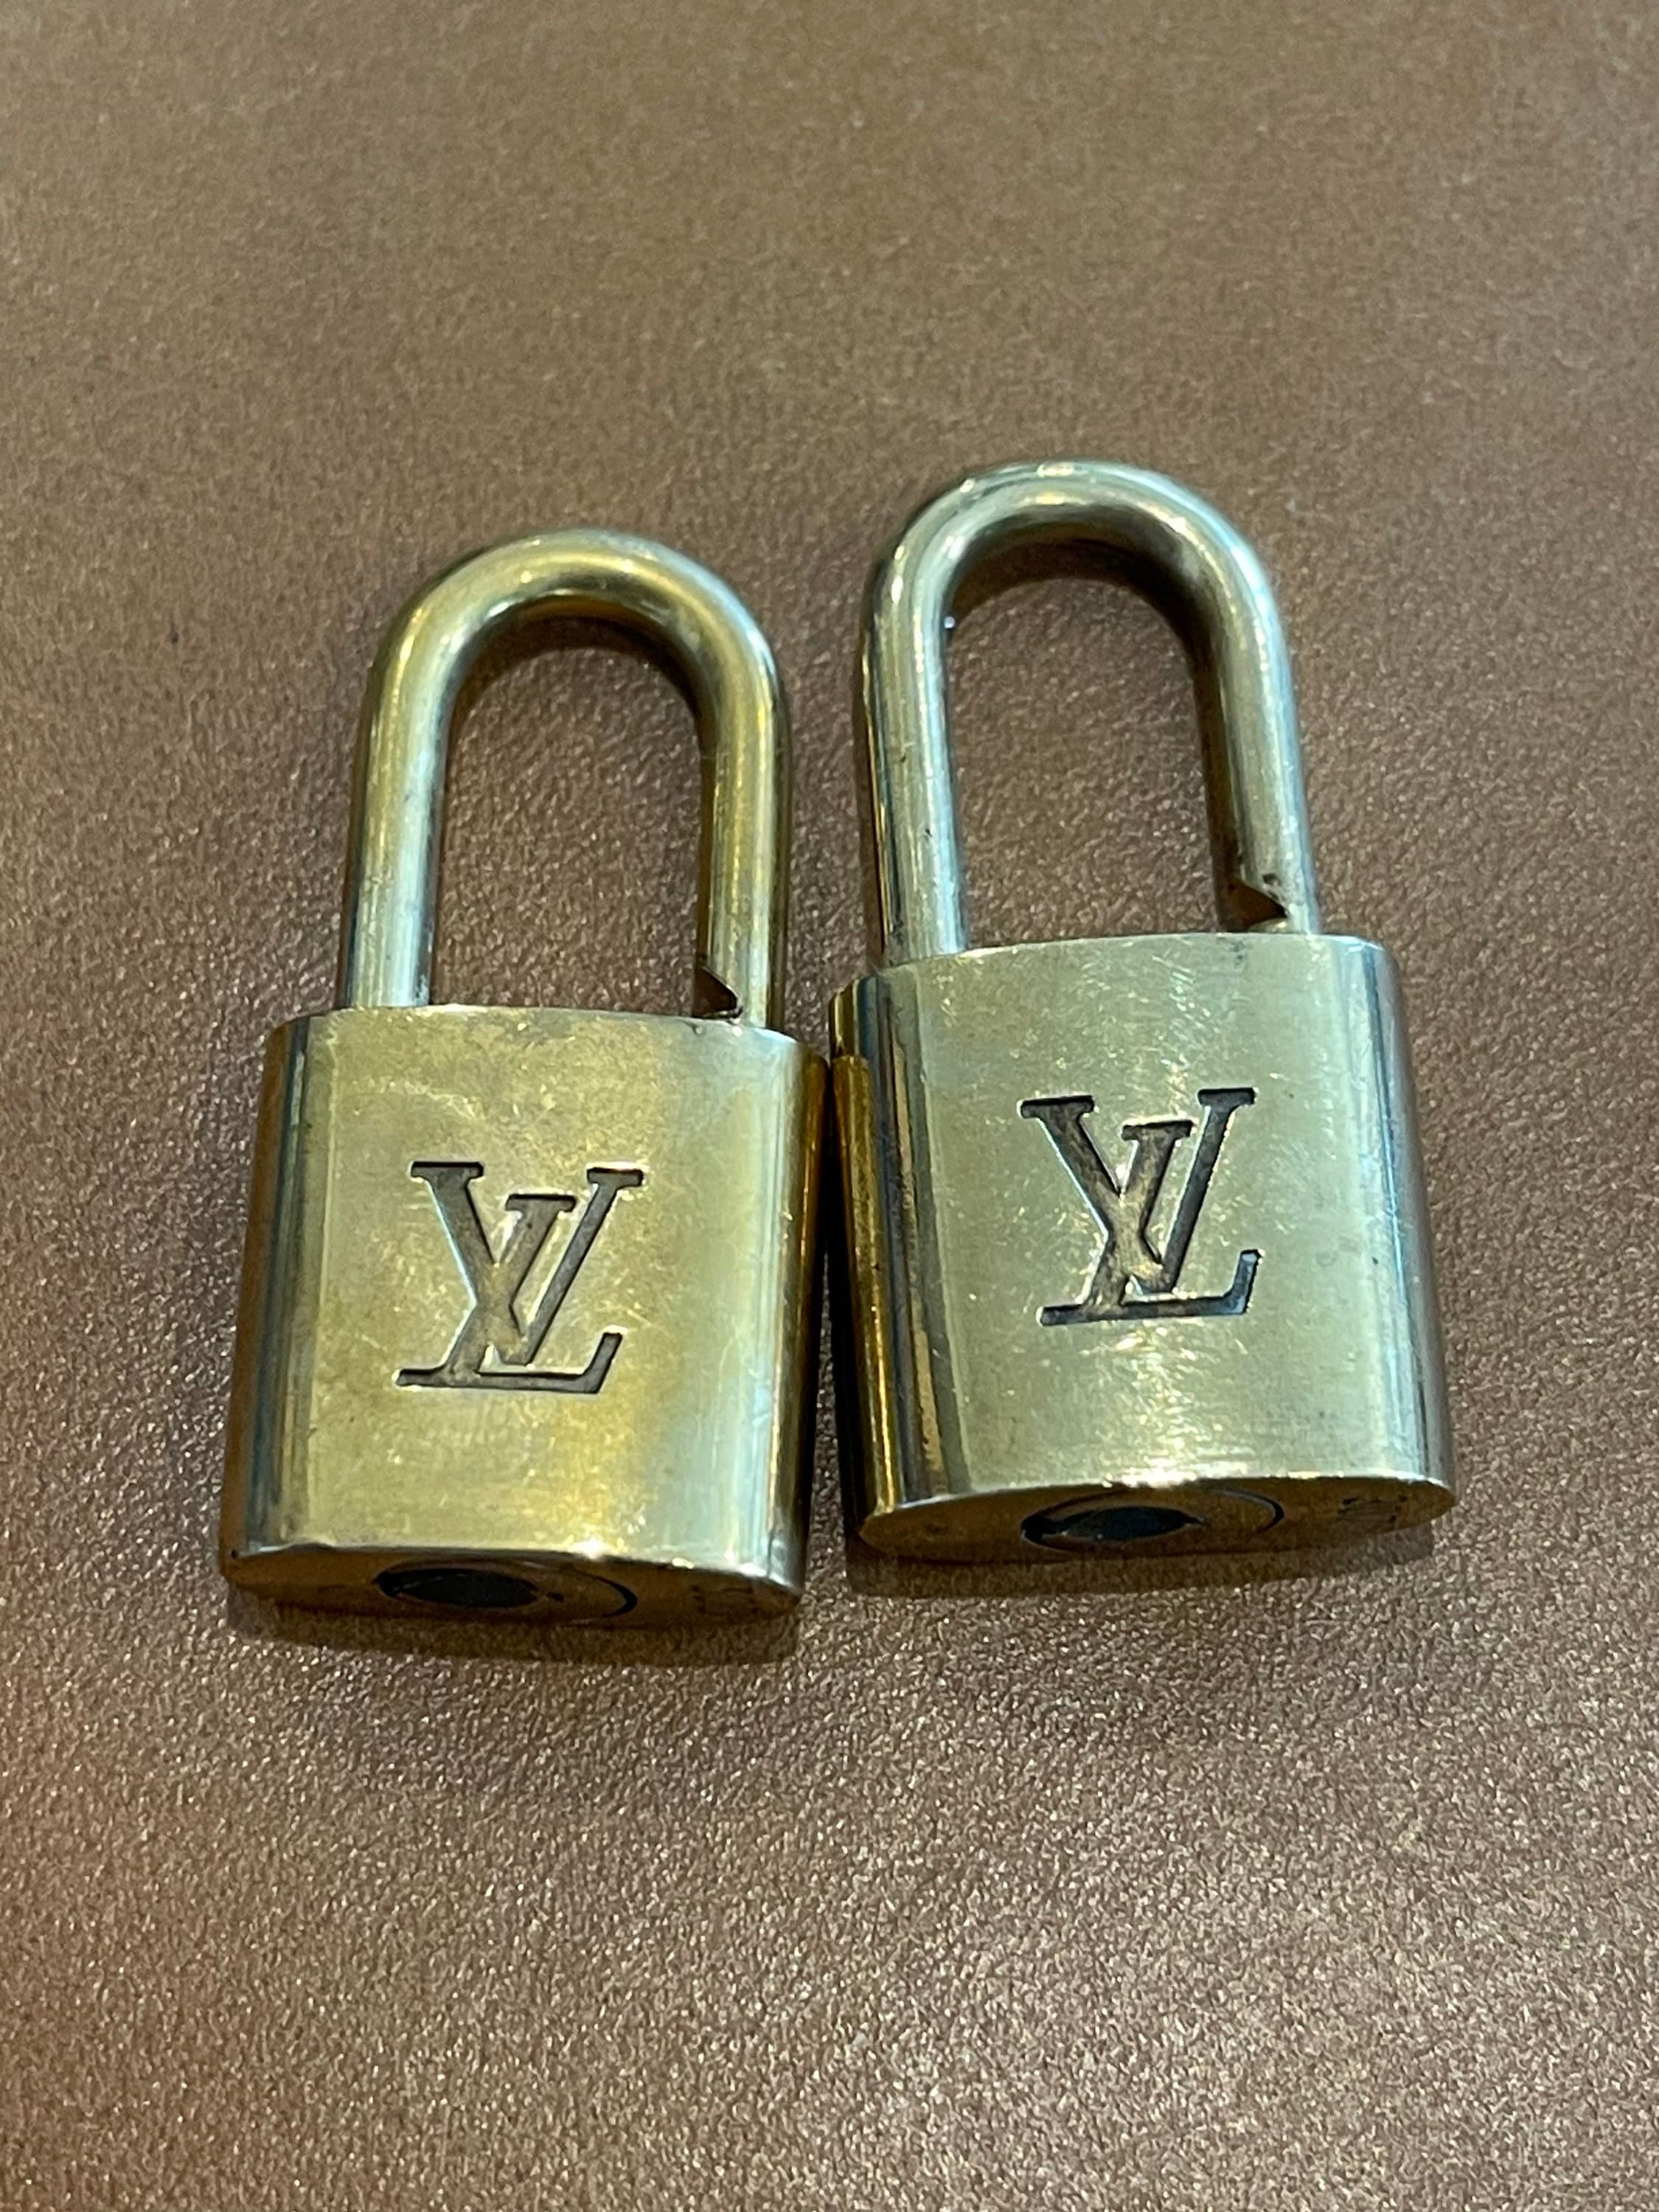 SL-15 Louis Vuitton Brass Padlock Lock and NO Key 300 & 307 